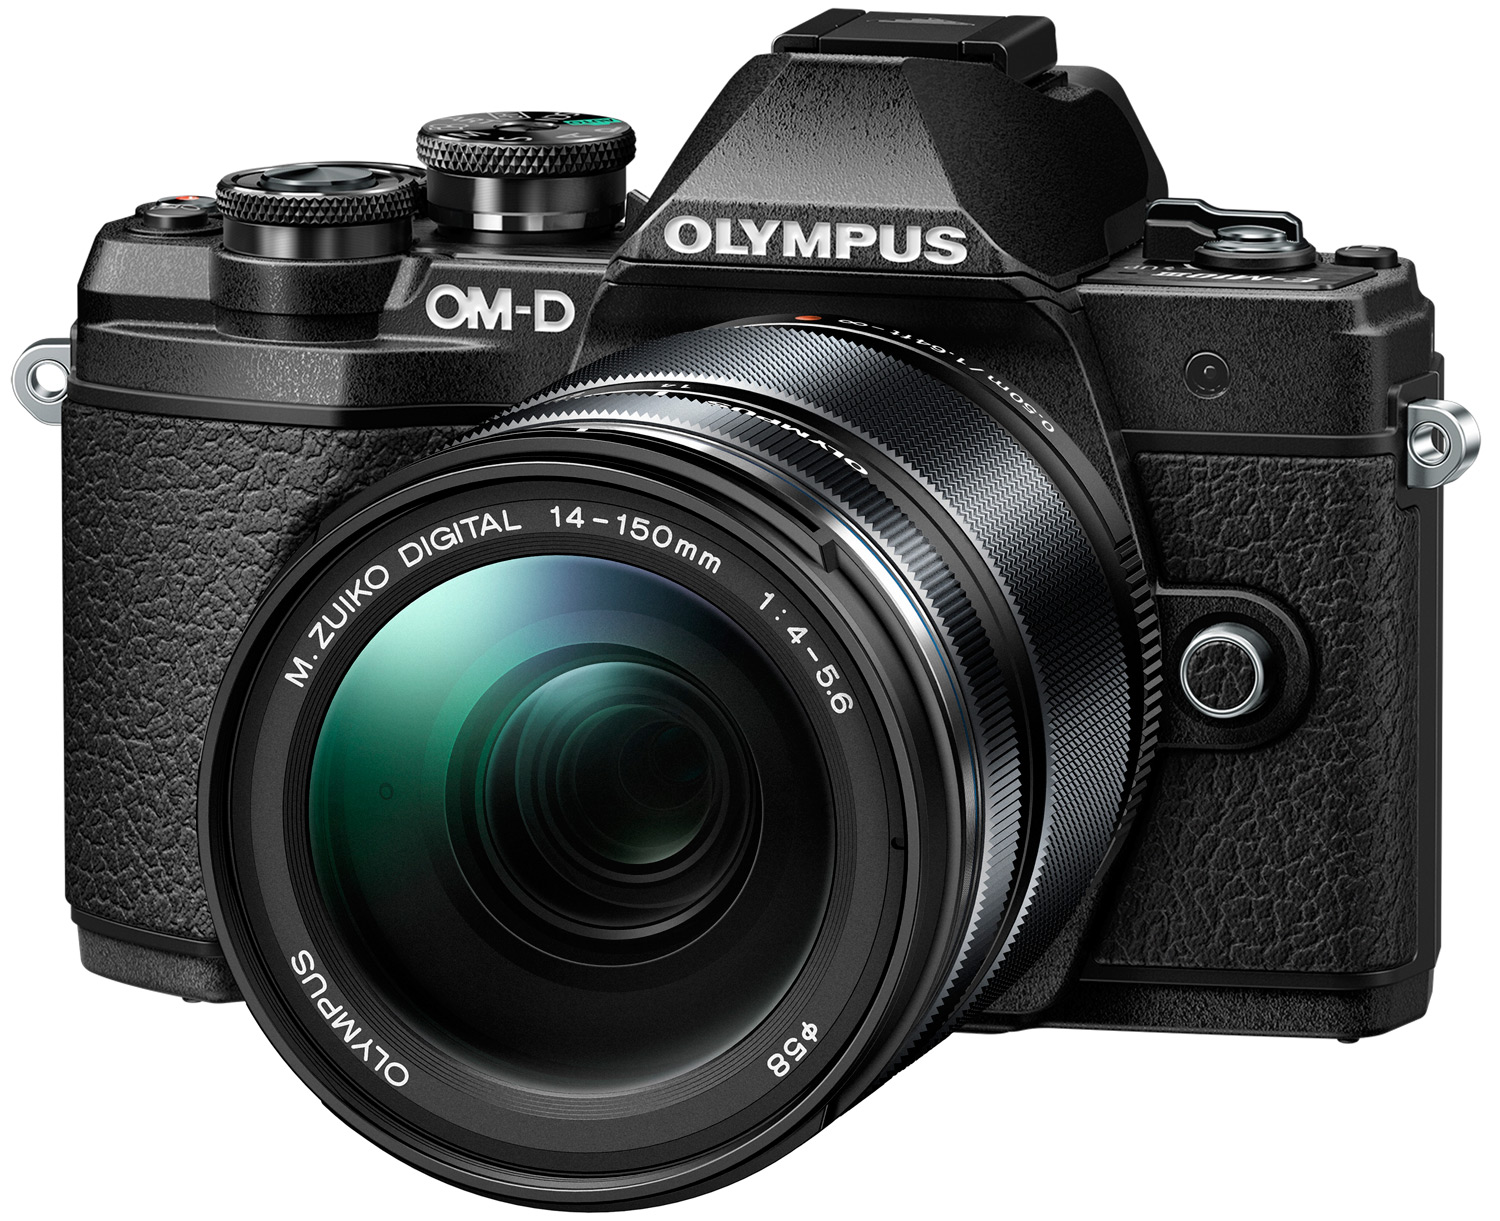 Беззеркальный фотоаппарат Olympus E-M10 Mark III + объектив M.ZUIKO DIGITAL ED 14-150mm 1:4-5.6 II, V207070BE010, Black